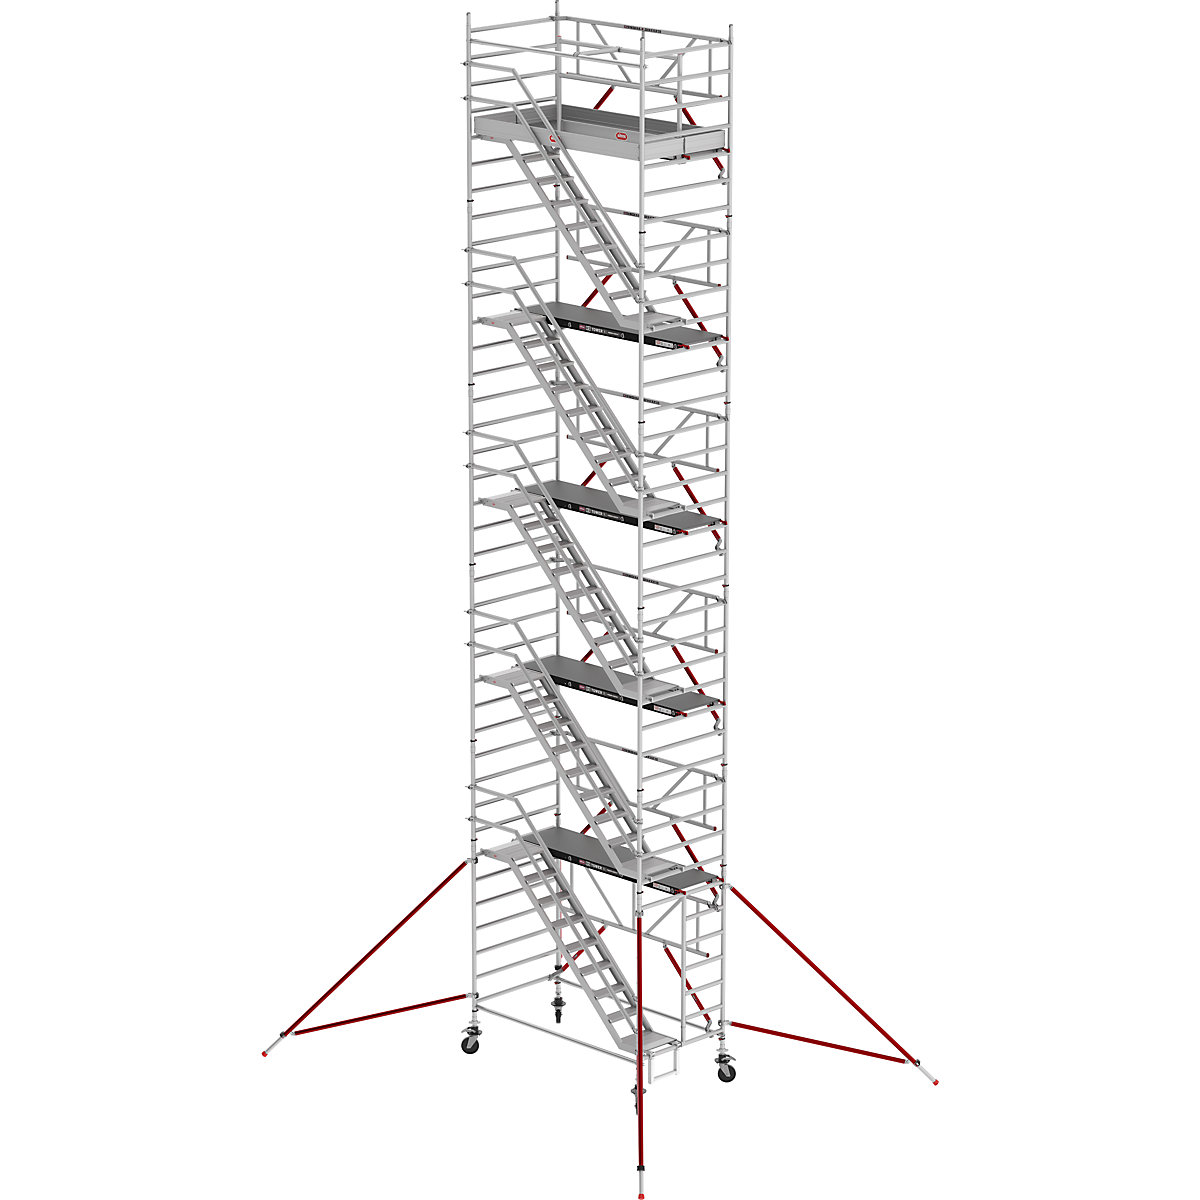 Oder s stopnicami RS TOWER 53, širok – Altrex, lesena ploščad, dolžina 2,45 m, delovna višina 12,20 m